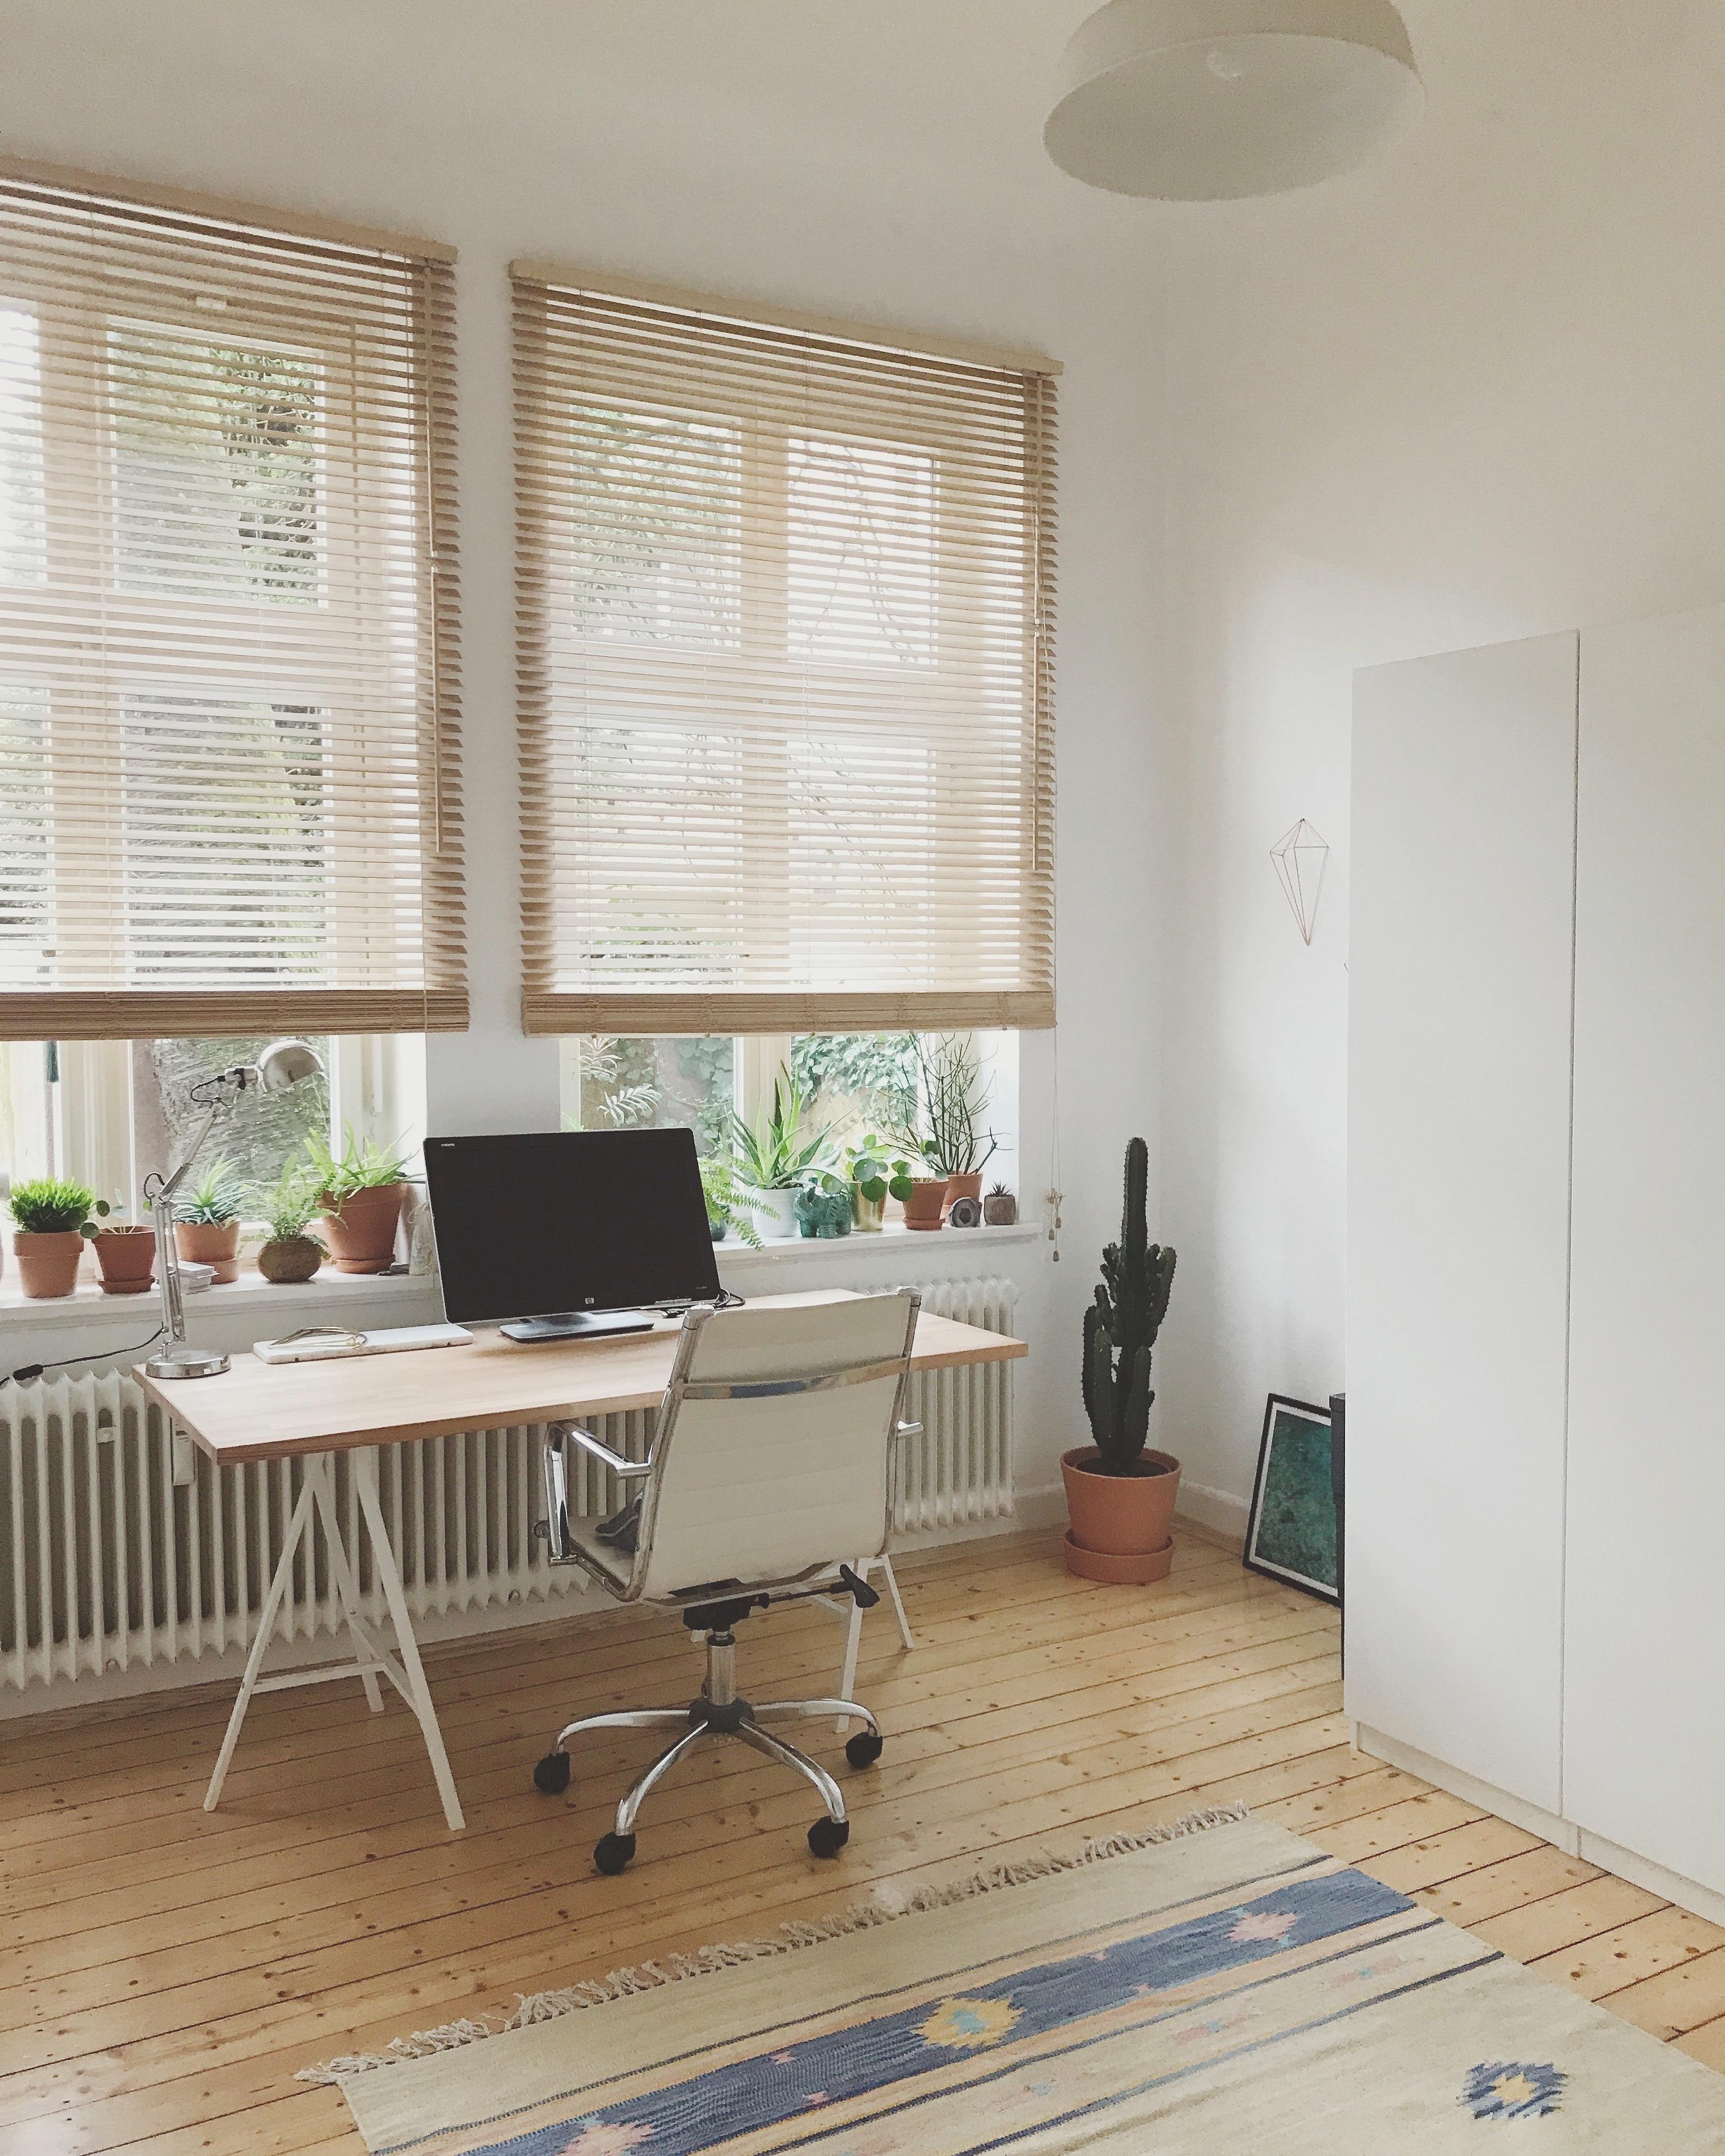 Home Office #bohemianliving #simplicity #altbauliebe #casaklabautermann #homelove